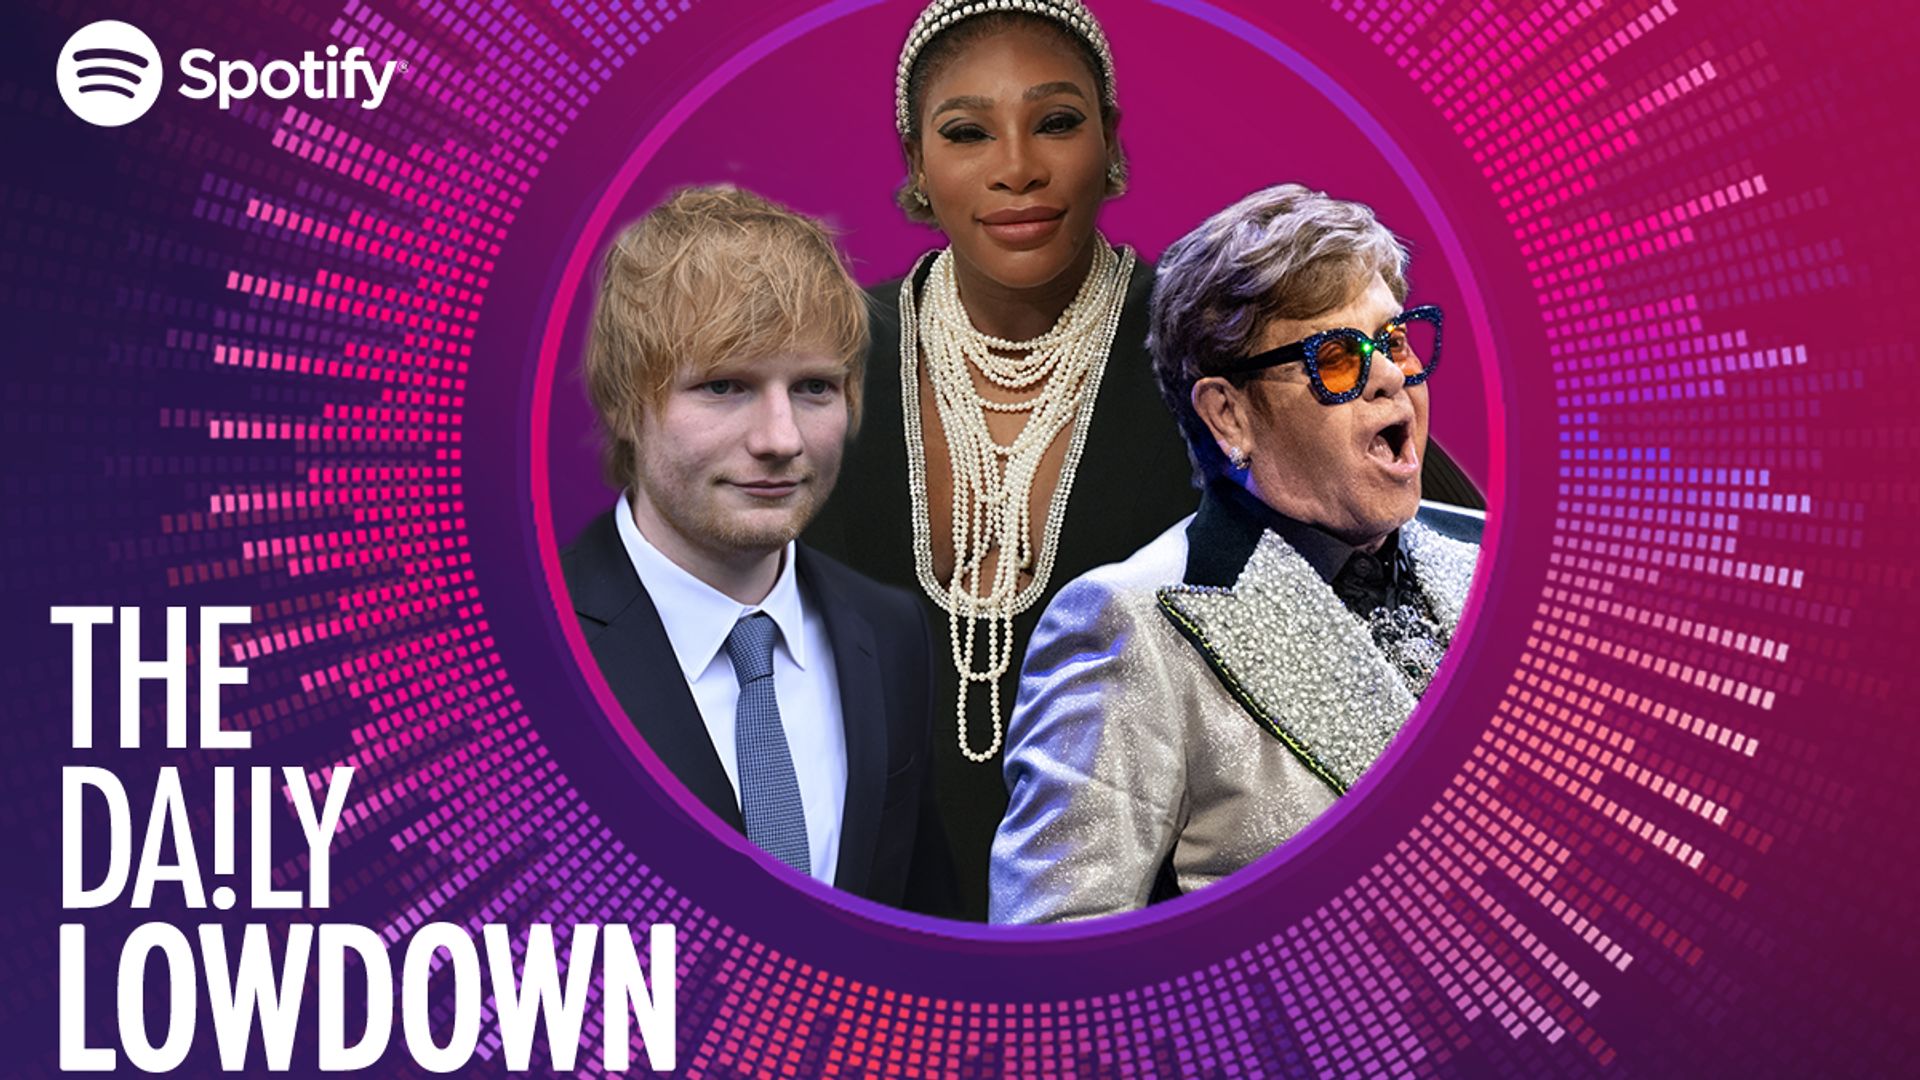 Ed Sheeran, Serena Williams and Sir Elton John